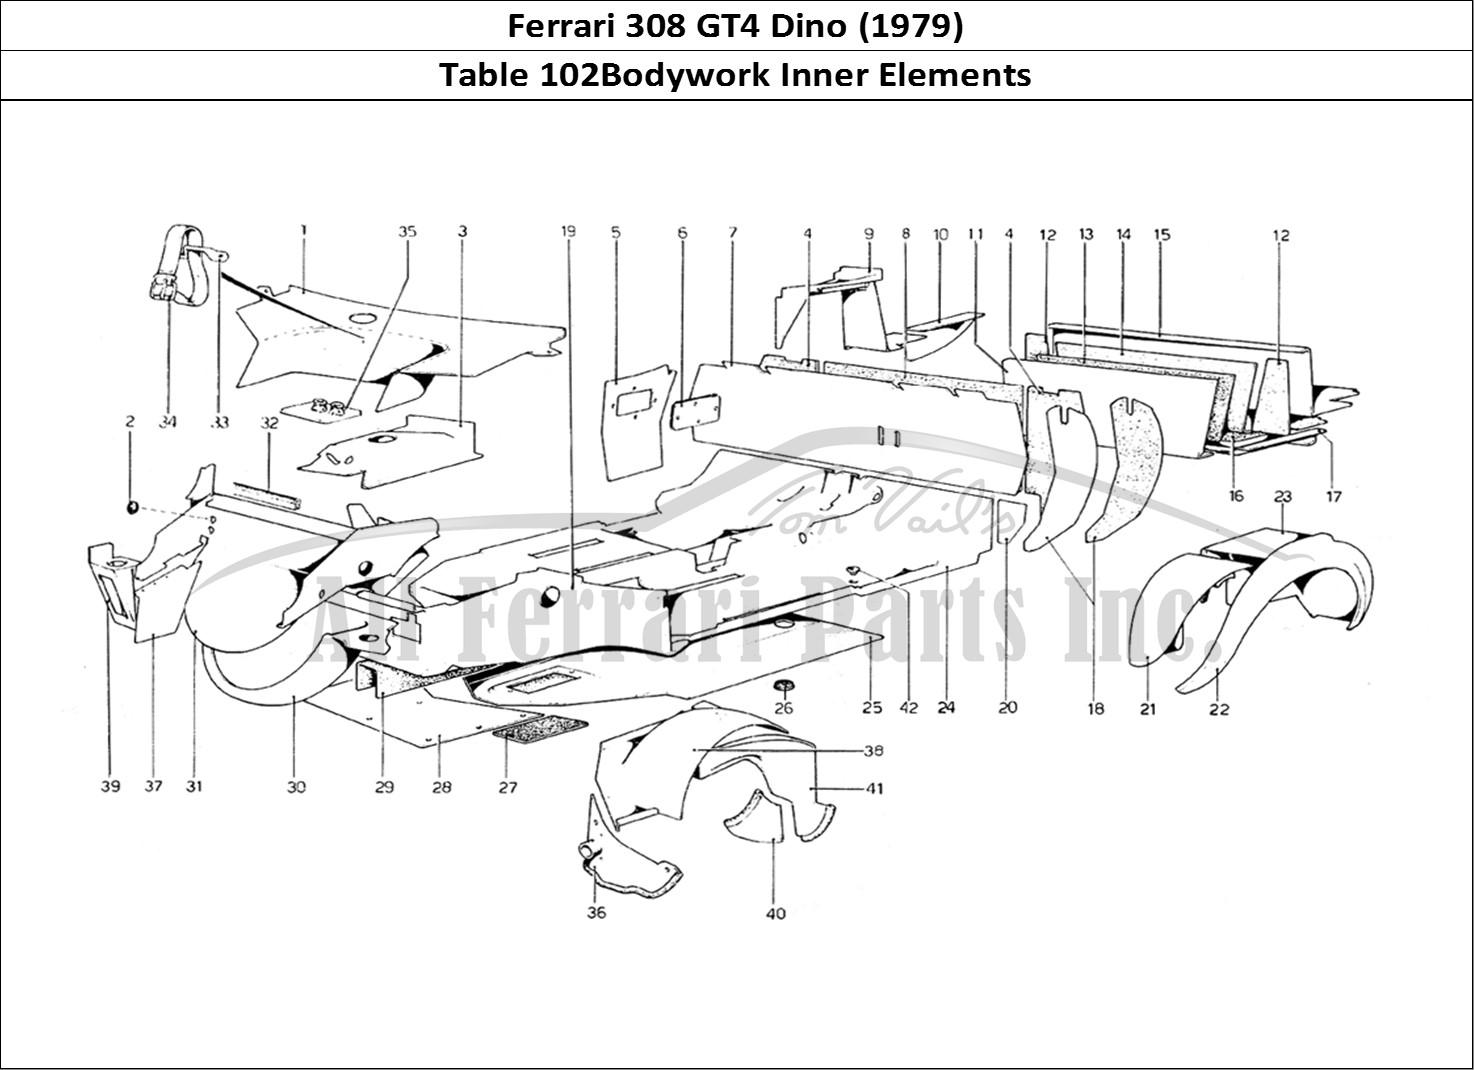 Ferrari Parts Ferrari 308 GT4 Dino (1979) Page 102 Body Shell - Inner Elemen